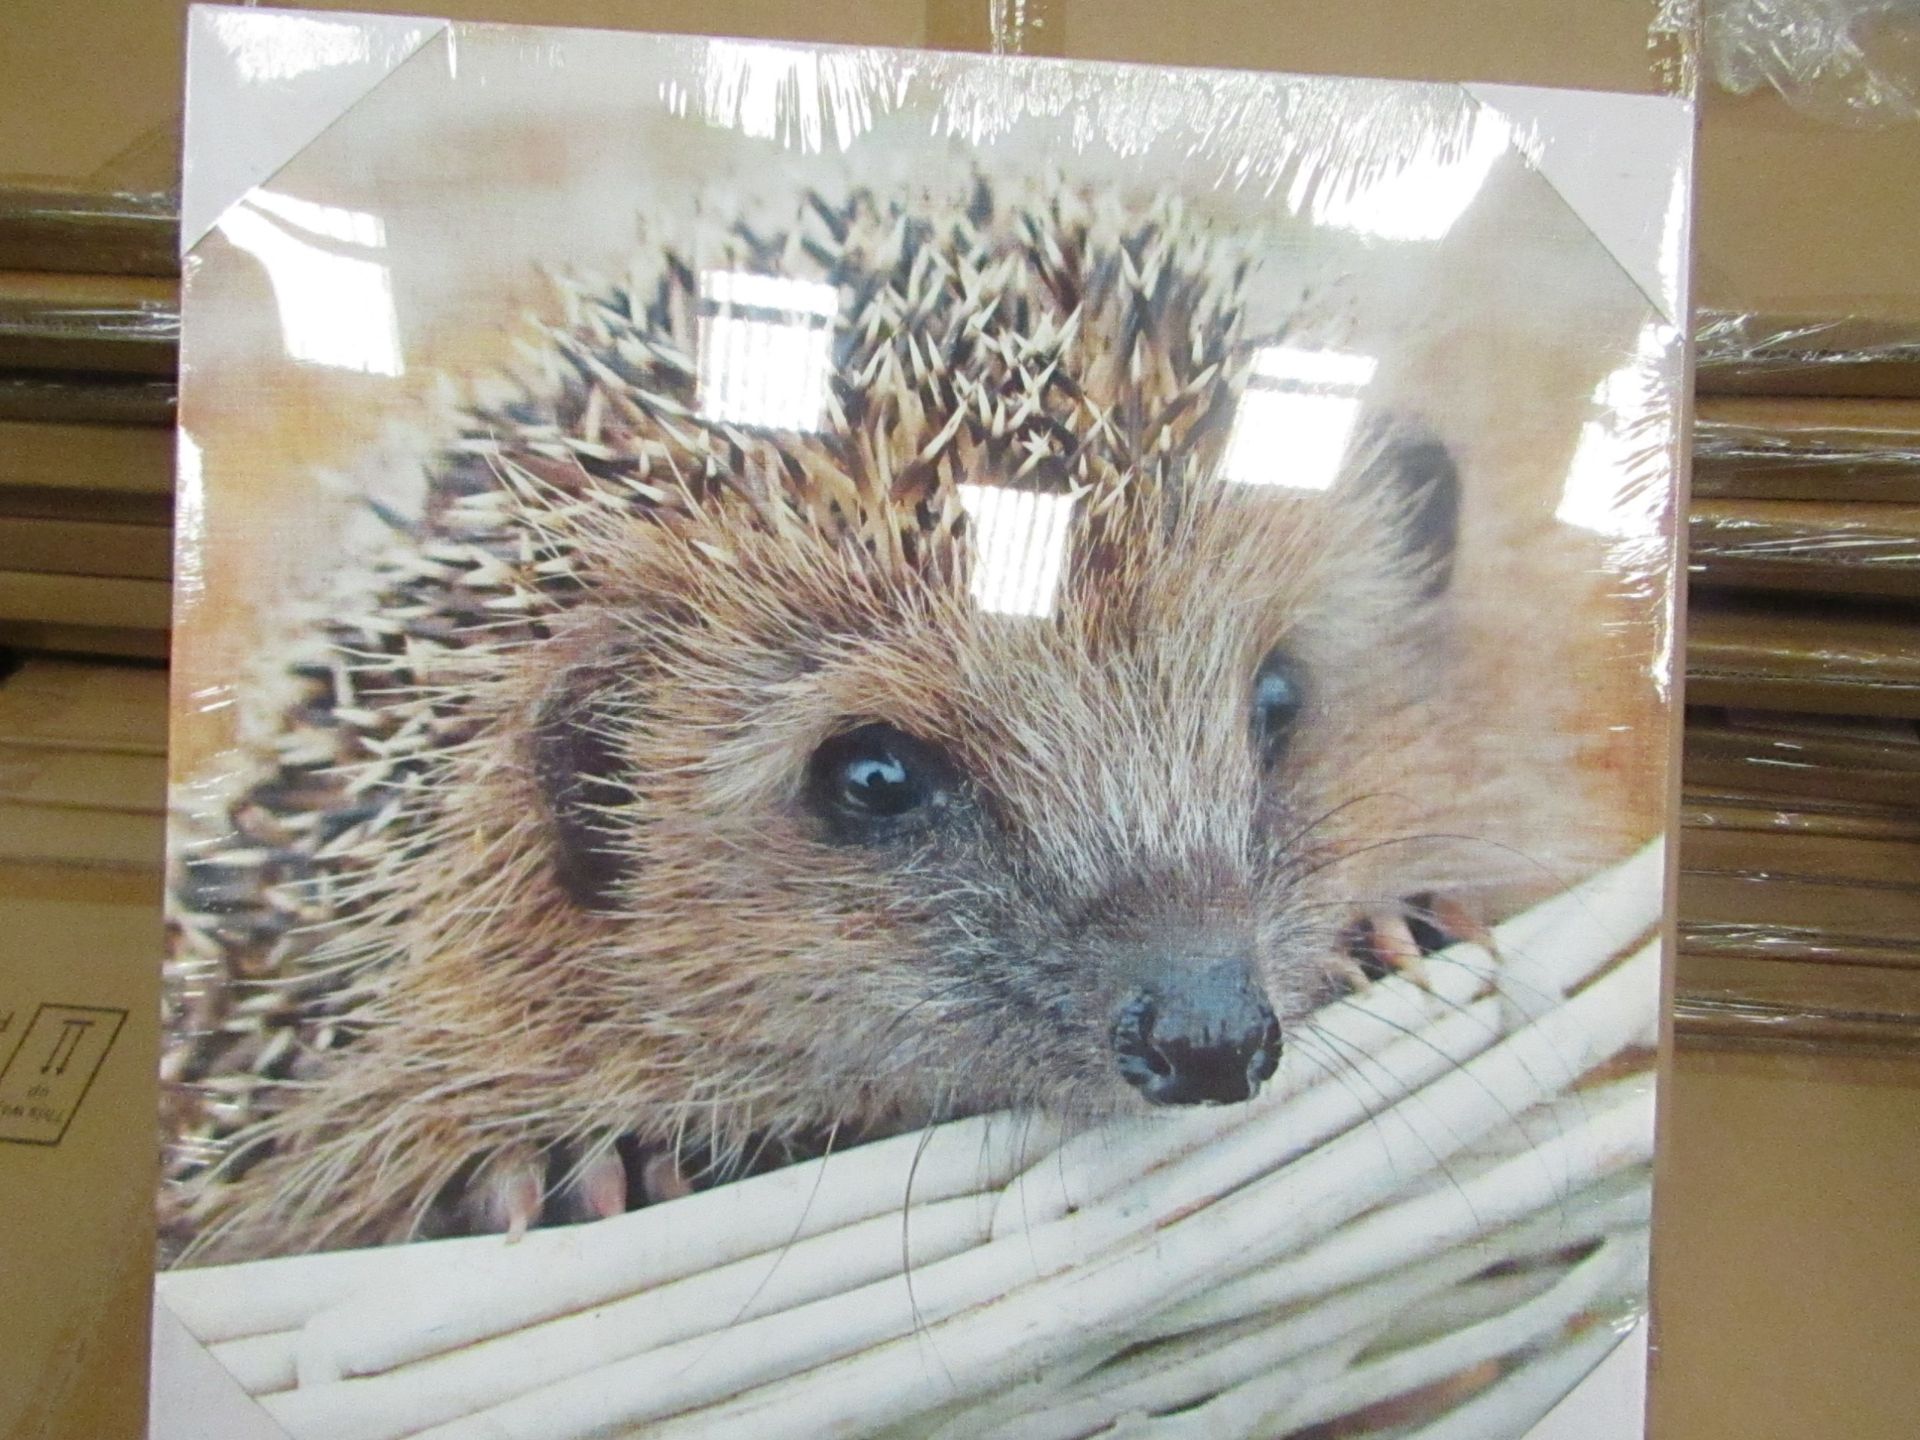 10 x "Hedgehog" Canvas Prints size 48cm x 48cm new & packaged